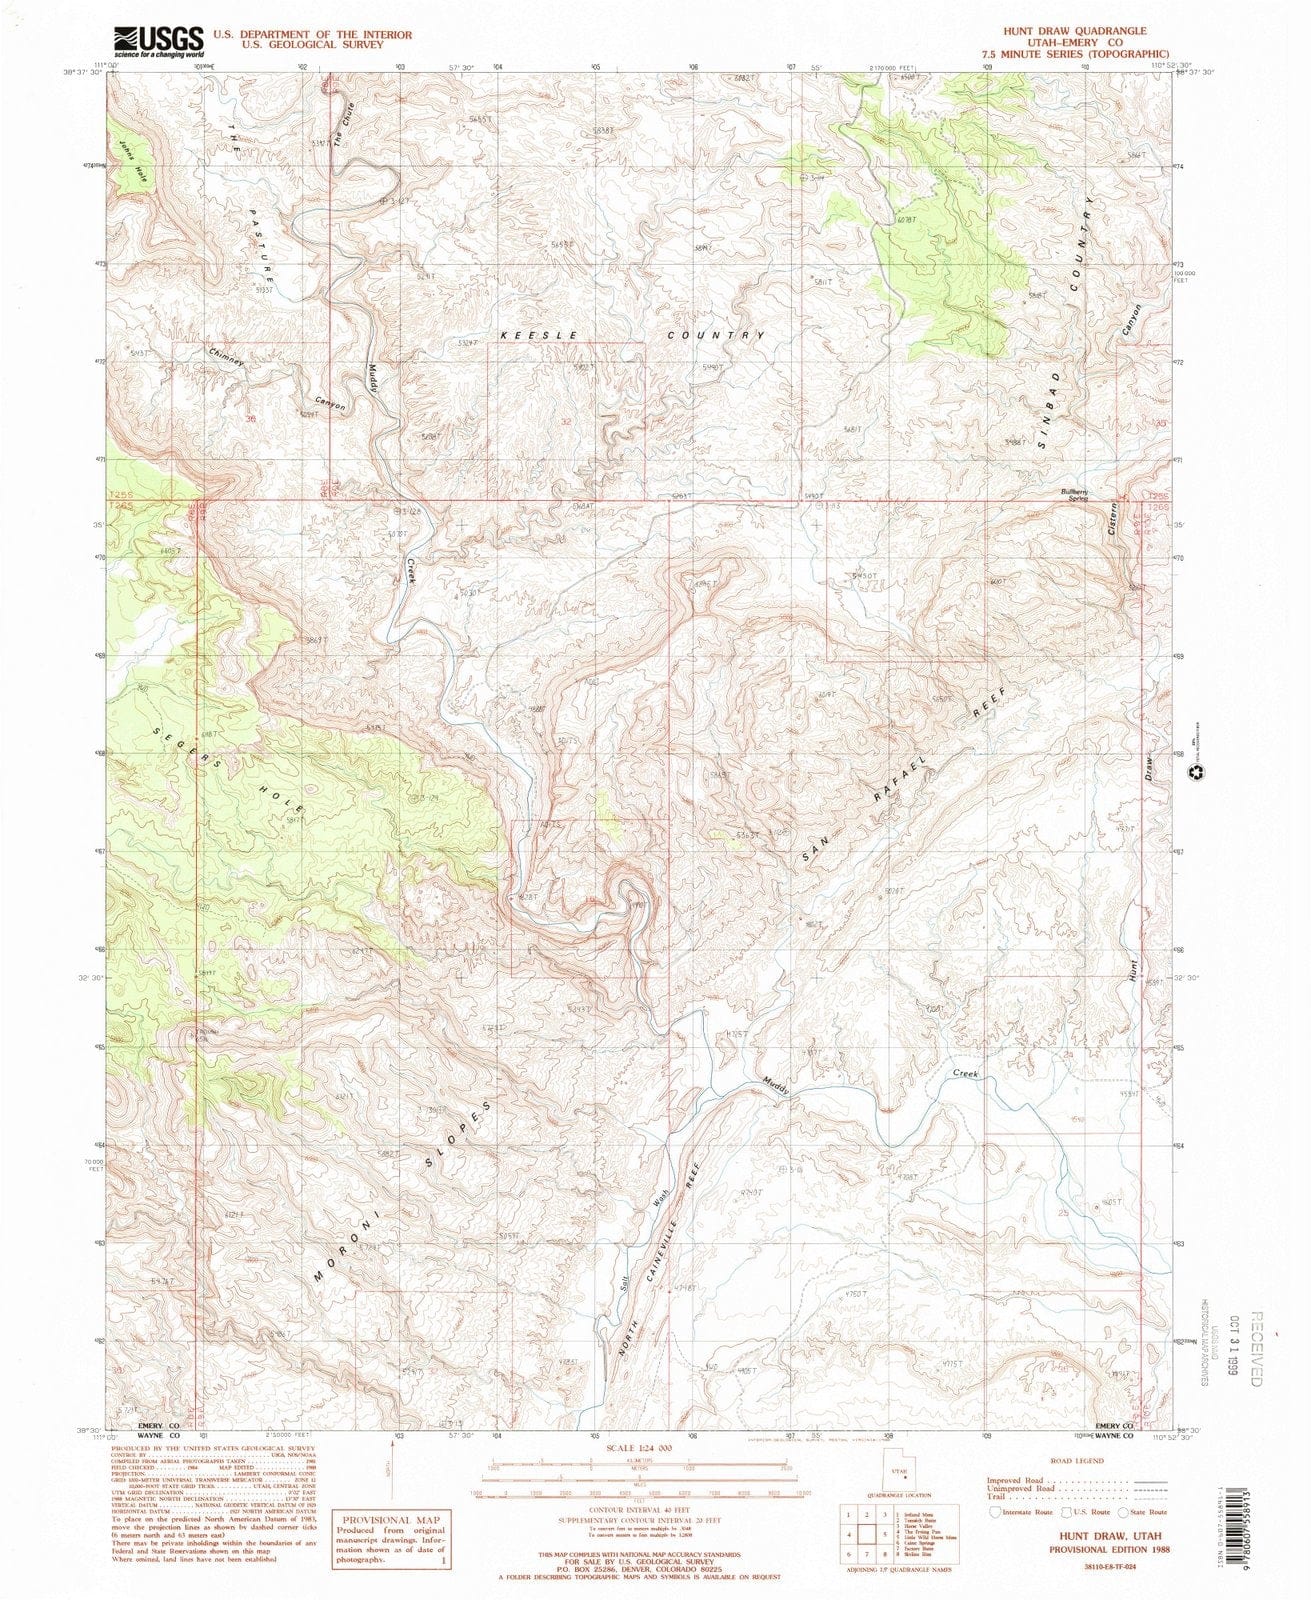 1988 Huntraw, UT - Utah - USGS Topographic Map